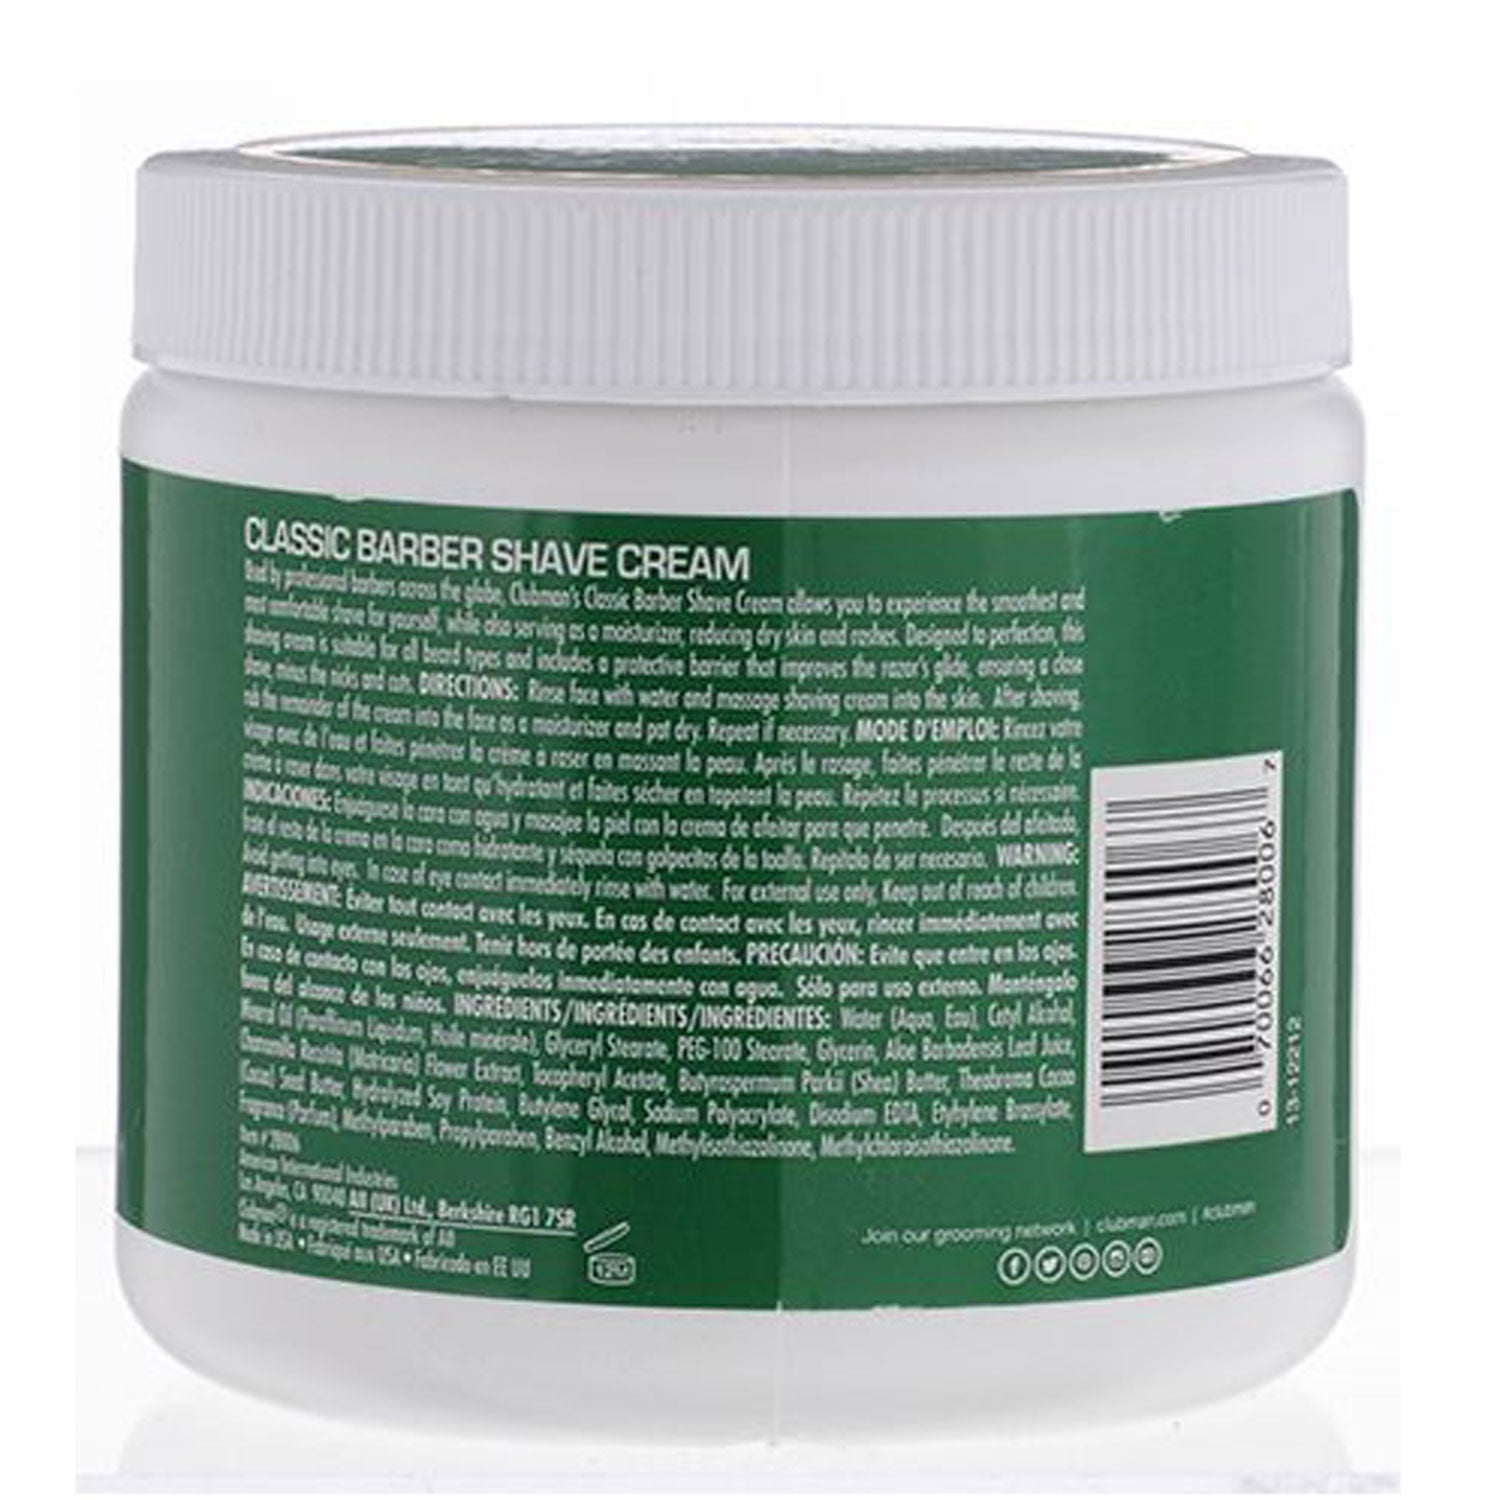 Clubman Classic Barber Shave Cream Jar 453ml - Orcadia